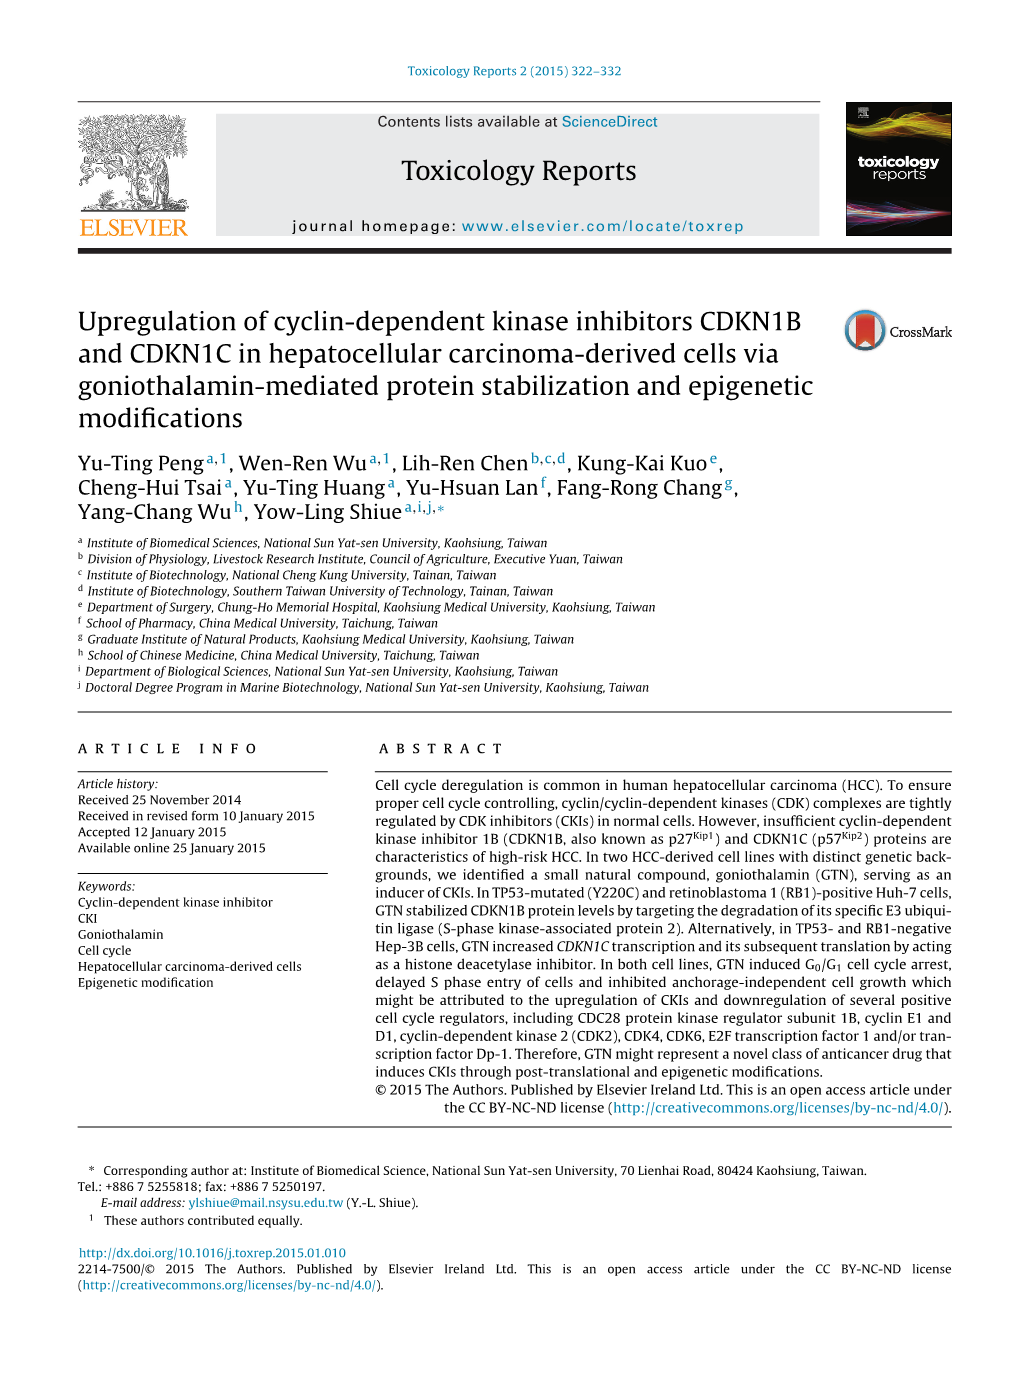 Upregulation of Cyclin-Dependent Kinase Inhibitors CDKN1B And